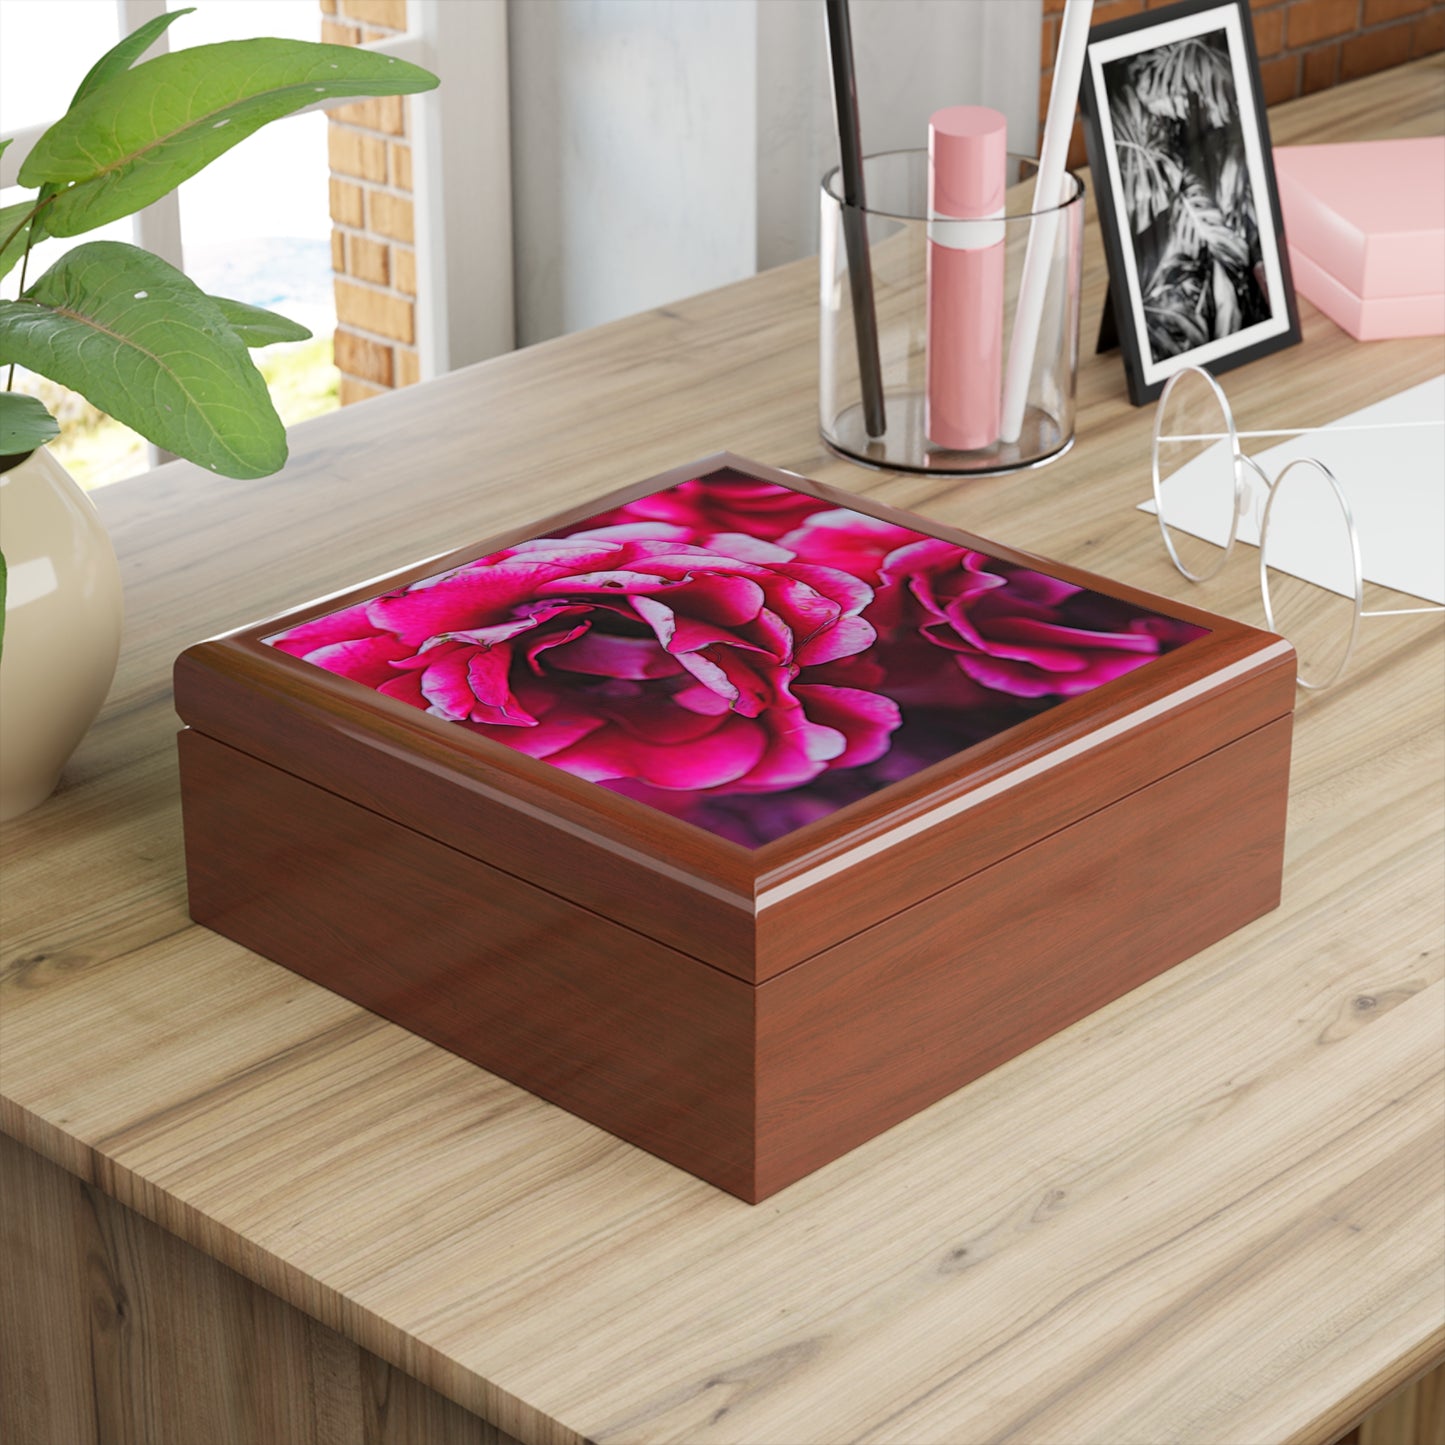 Dark Pink Flowers Jewelry Box